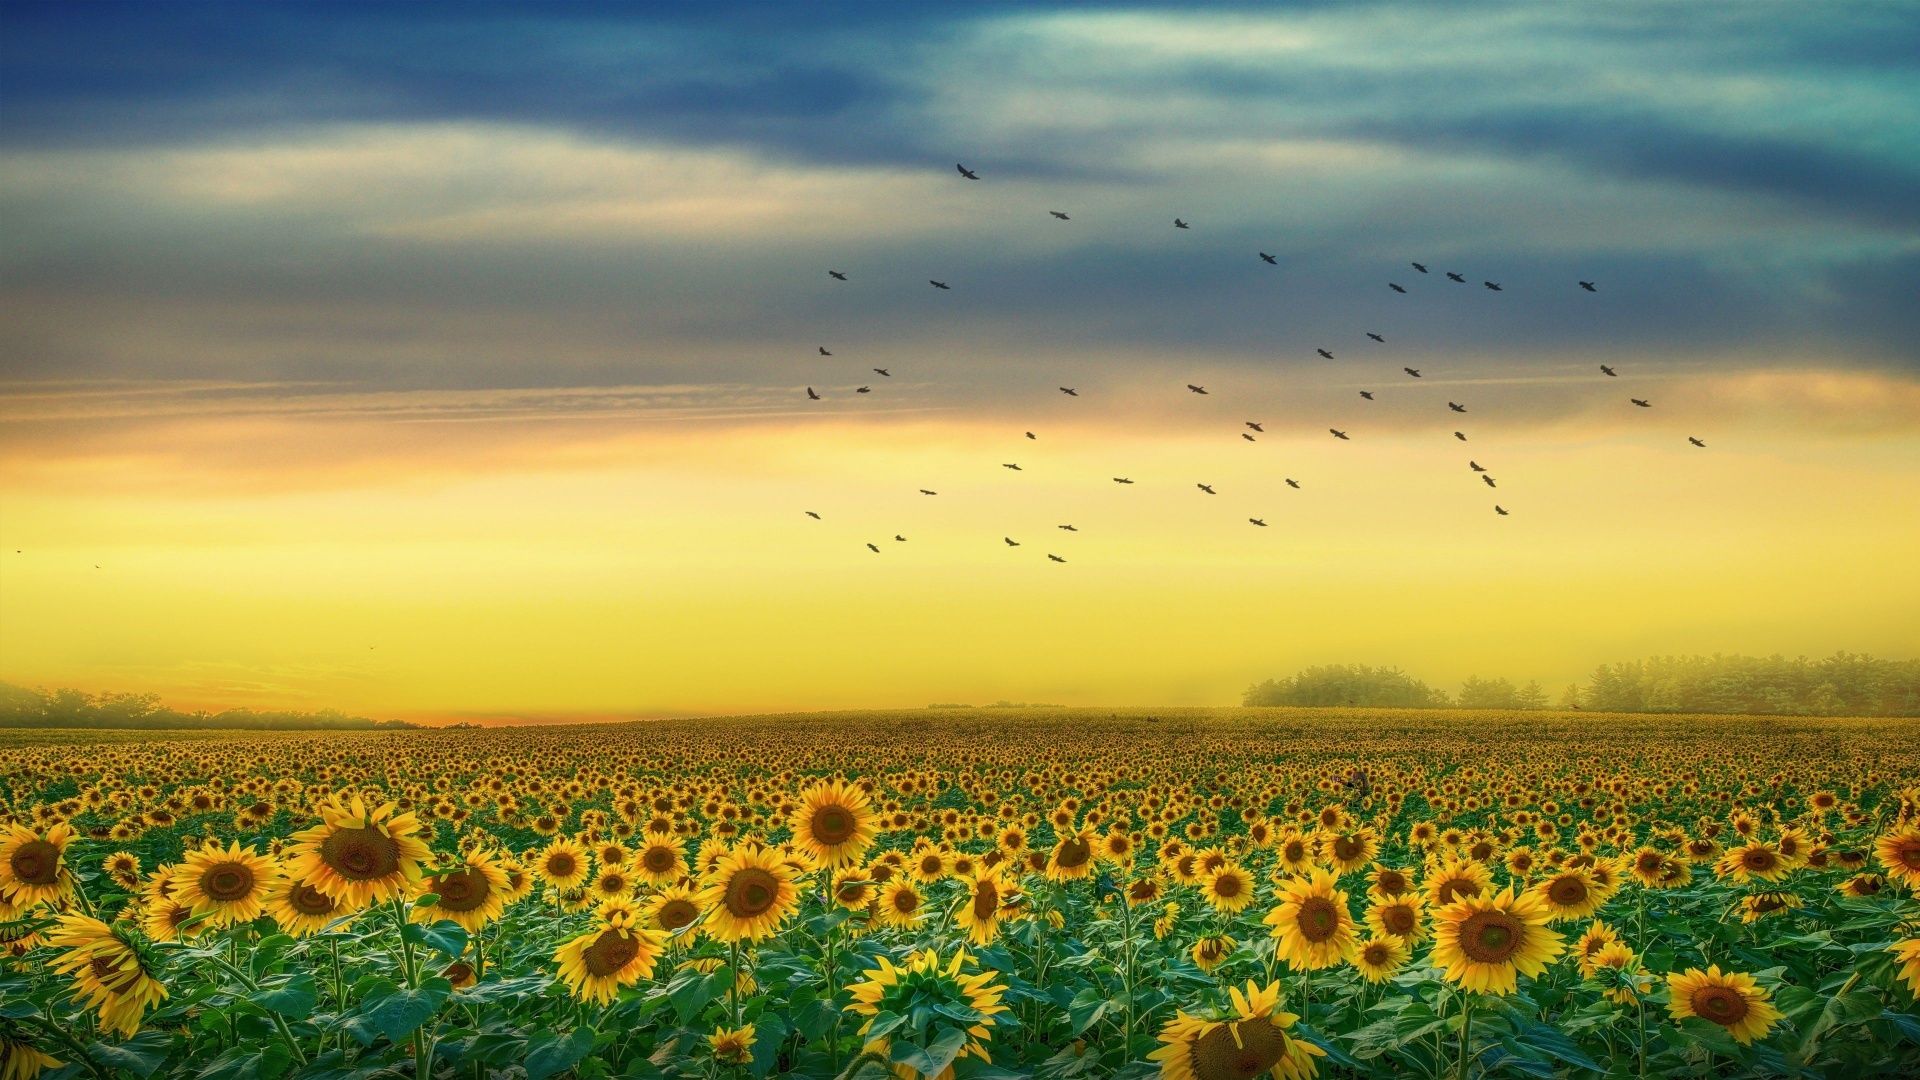 A field of sunflowers at sunset - Sunflower